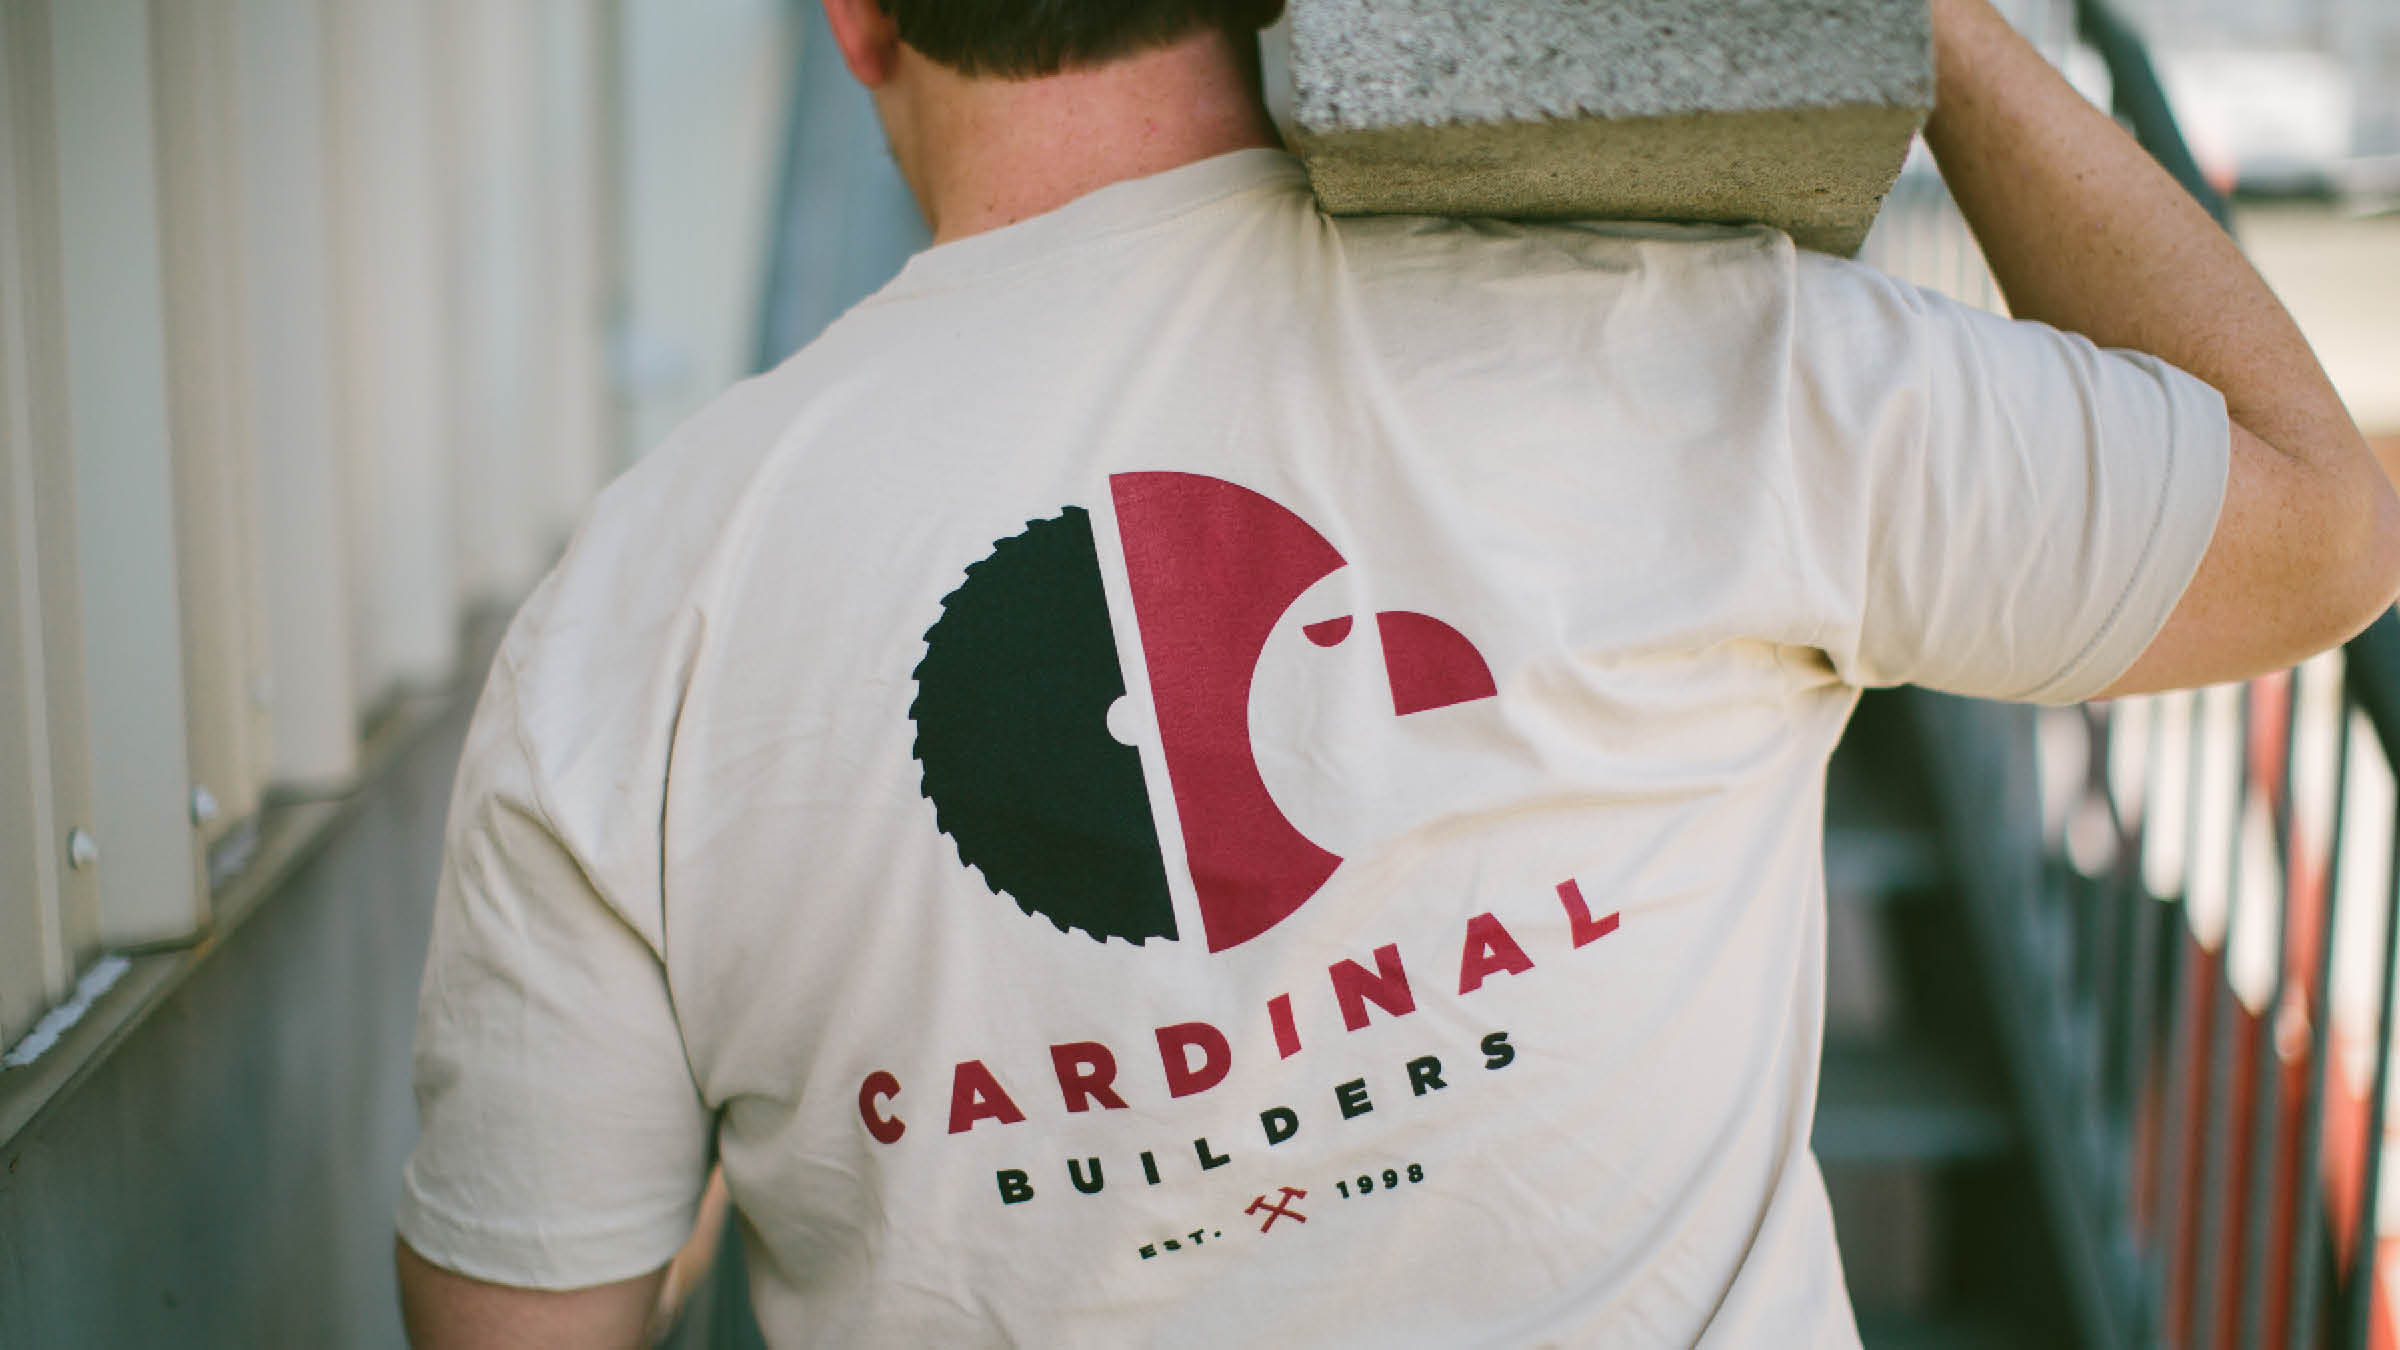 Cardinal Builders